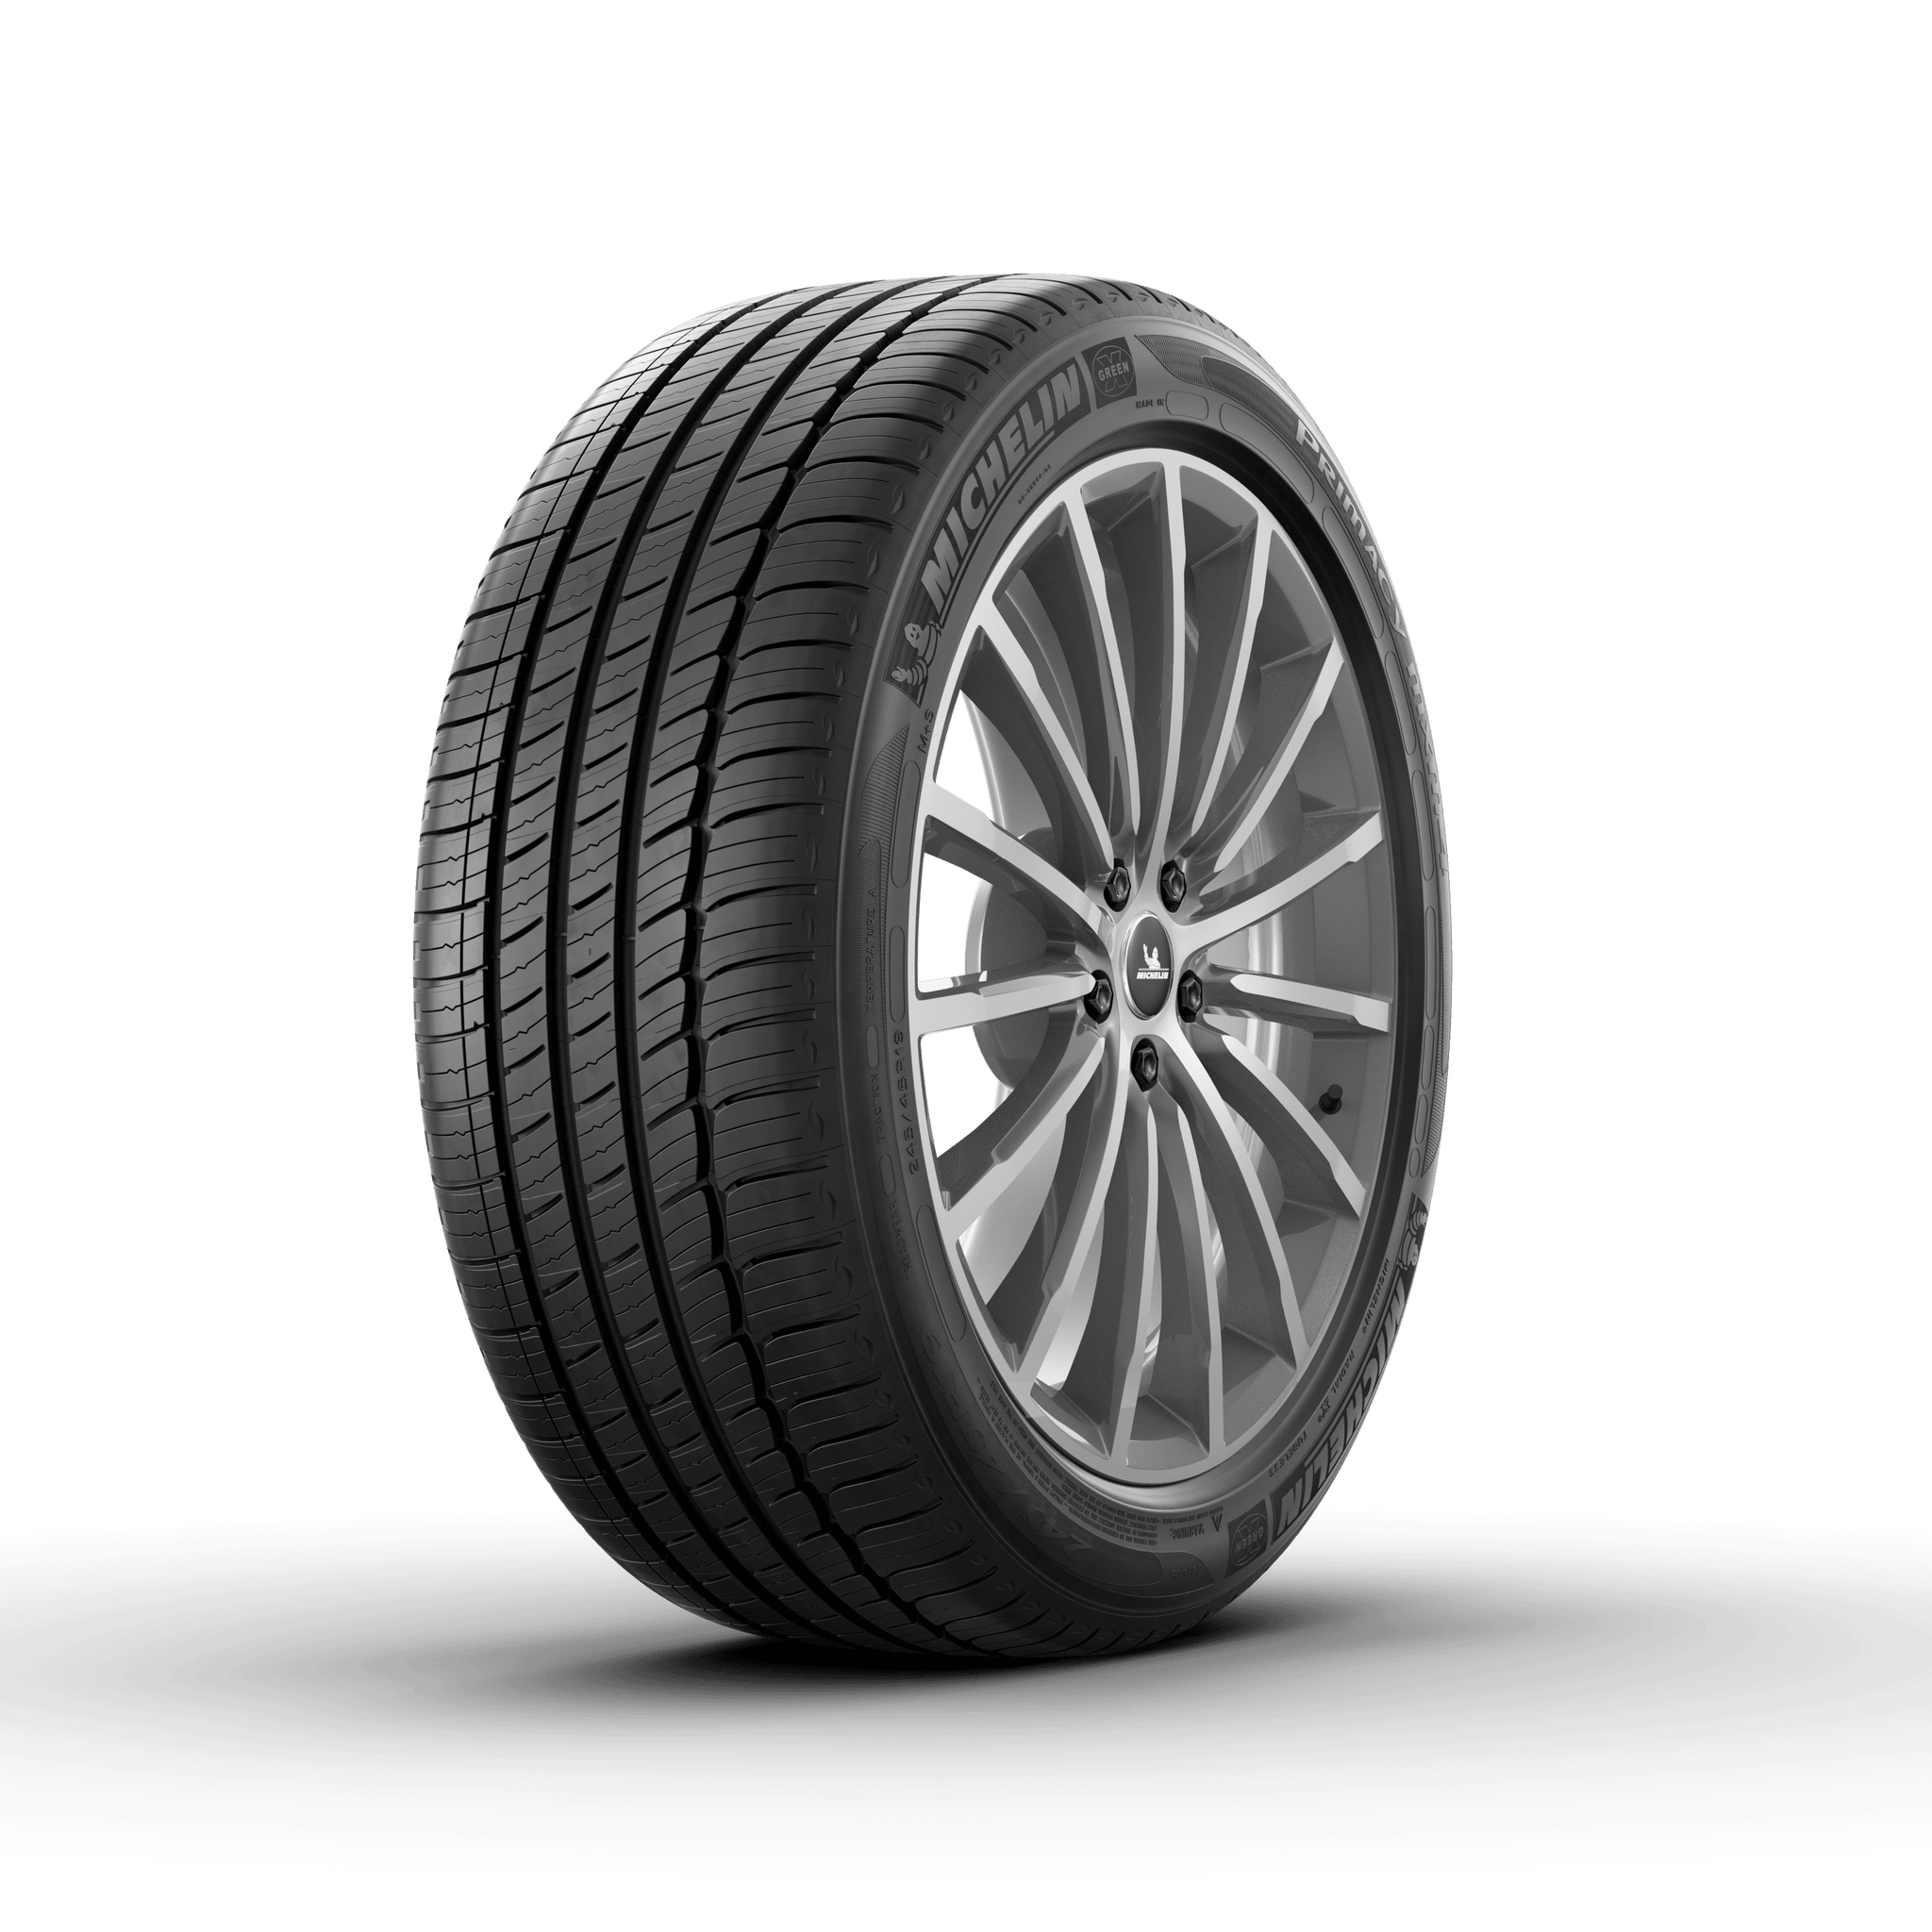 MICHELIN PRIMACY MXM4 235/40R19 (26.4X9.3R 19) Tires